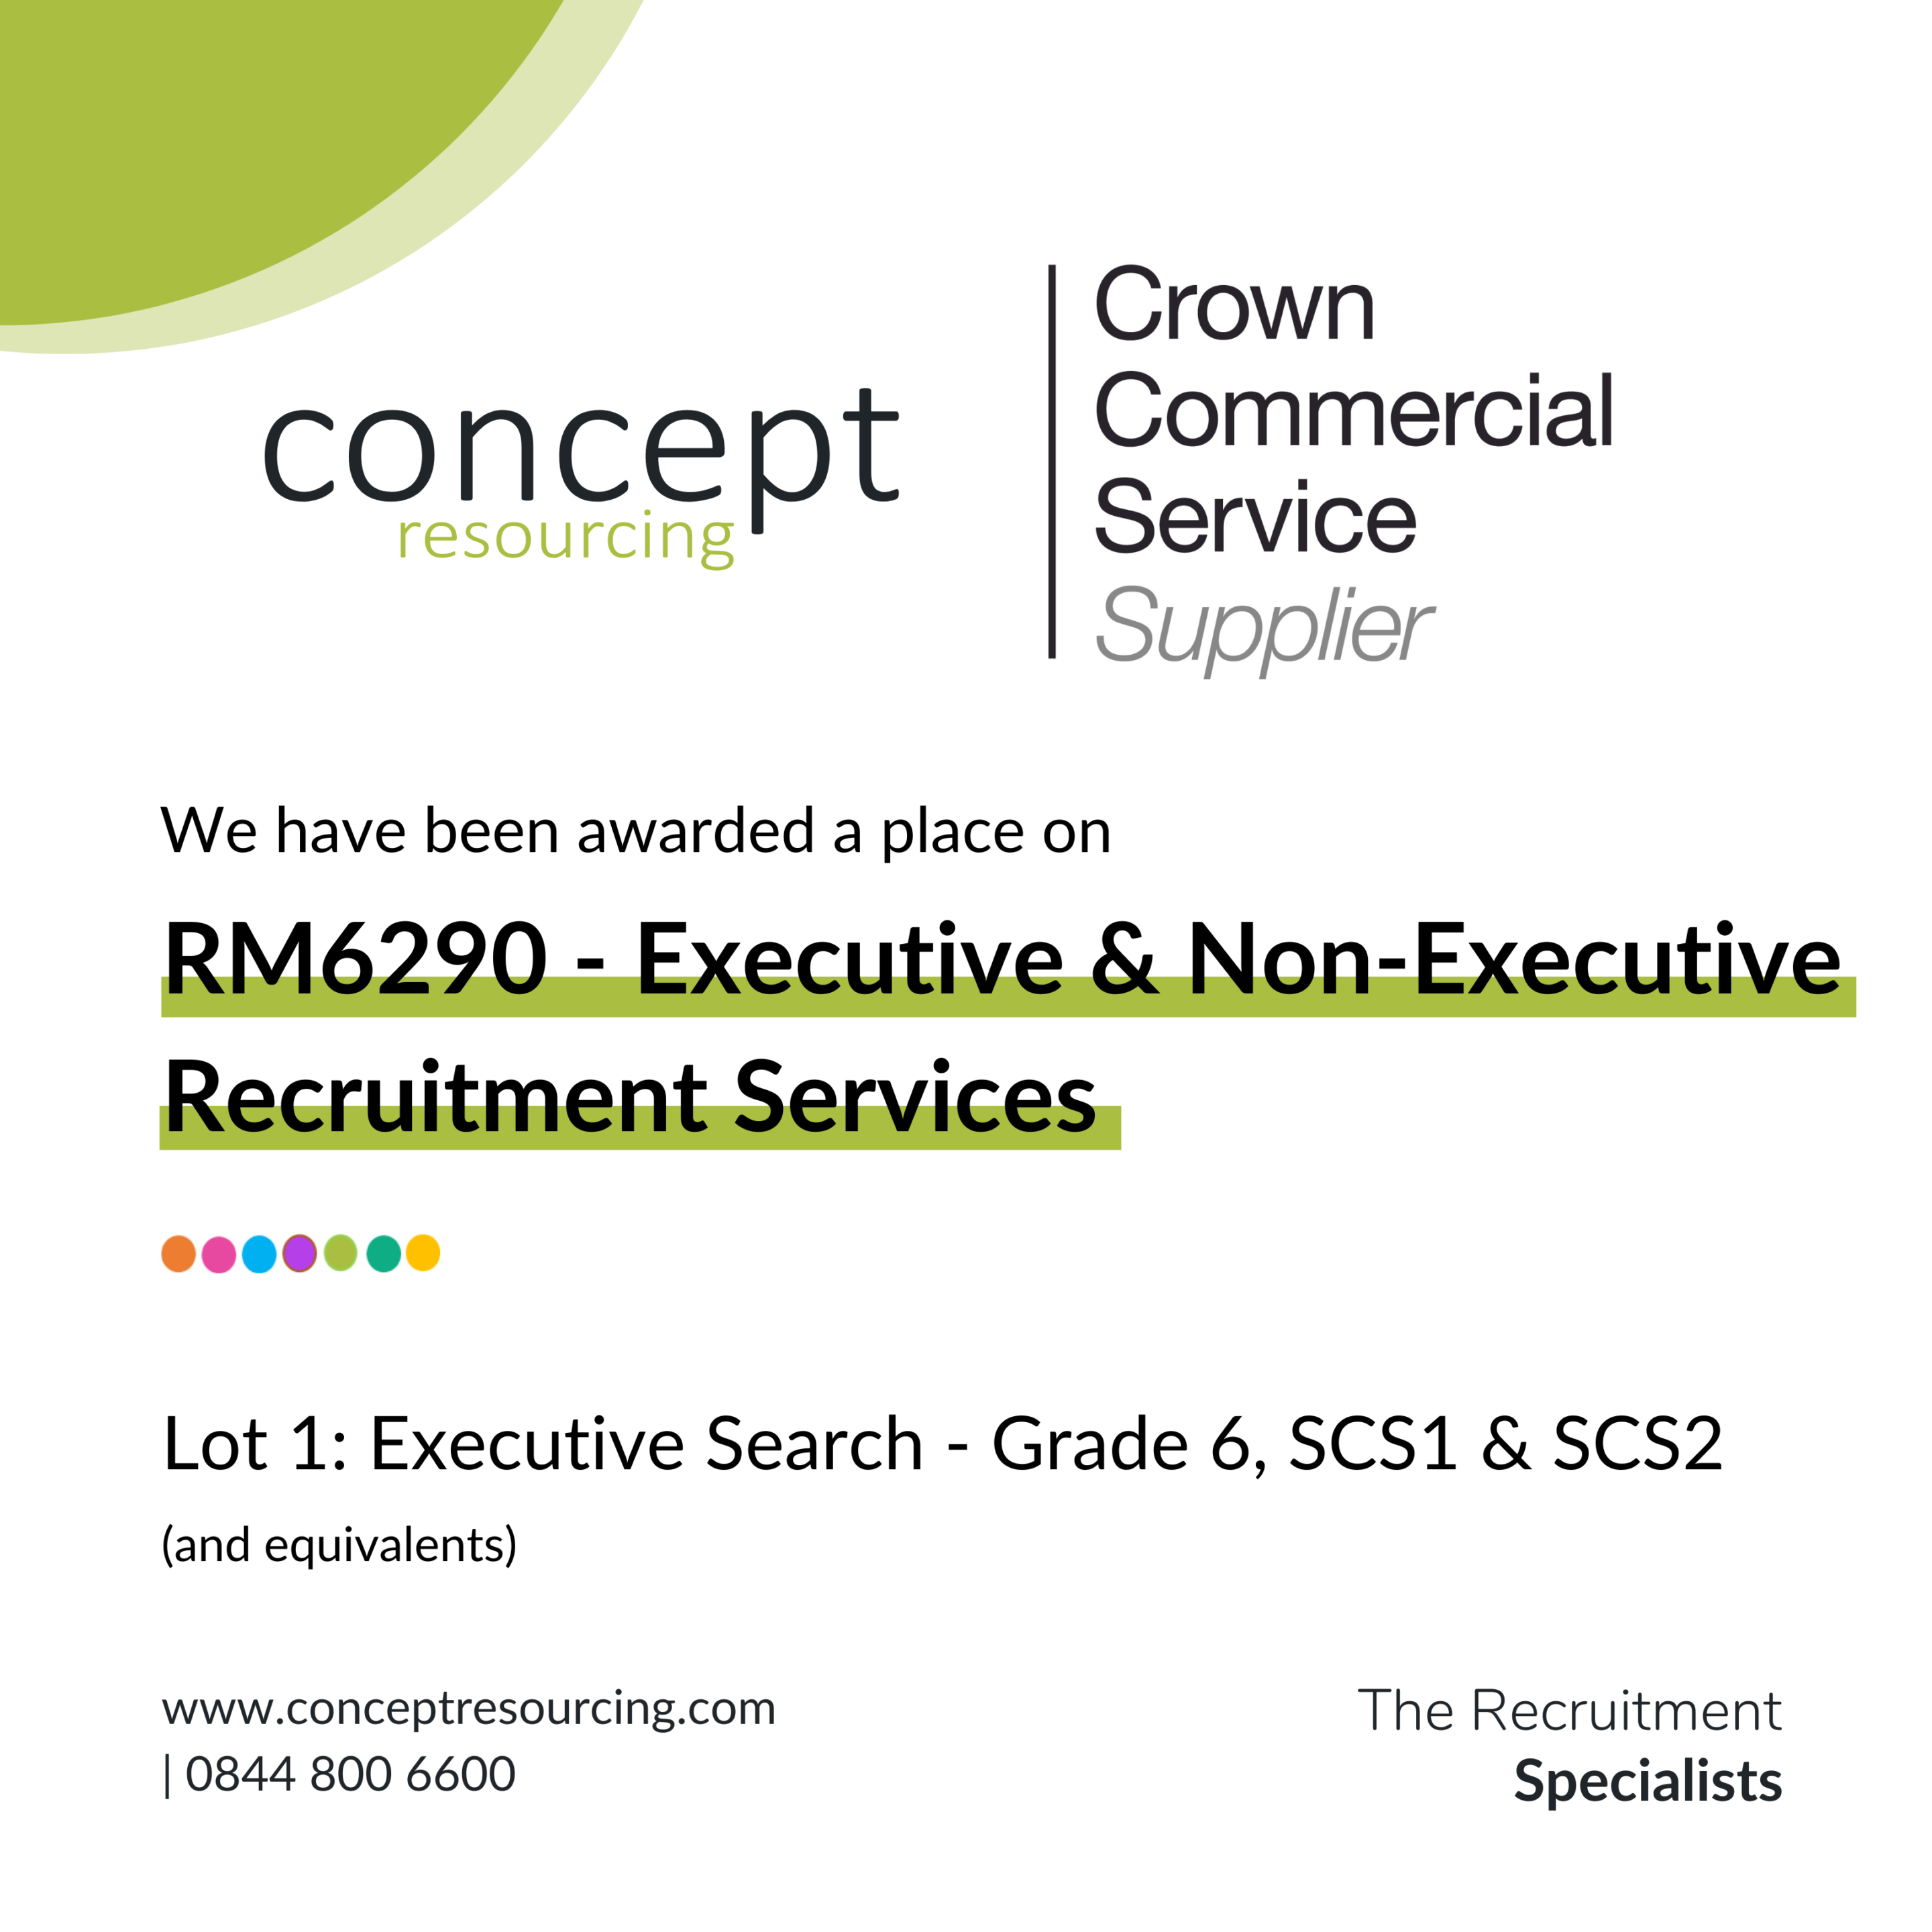 Concept named as strategic supplier on CCS recruitment framework, RM6290